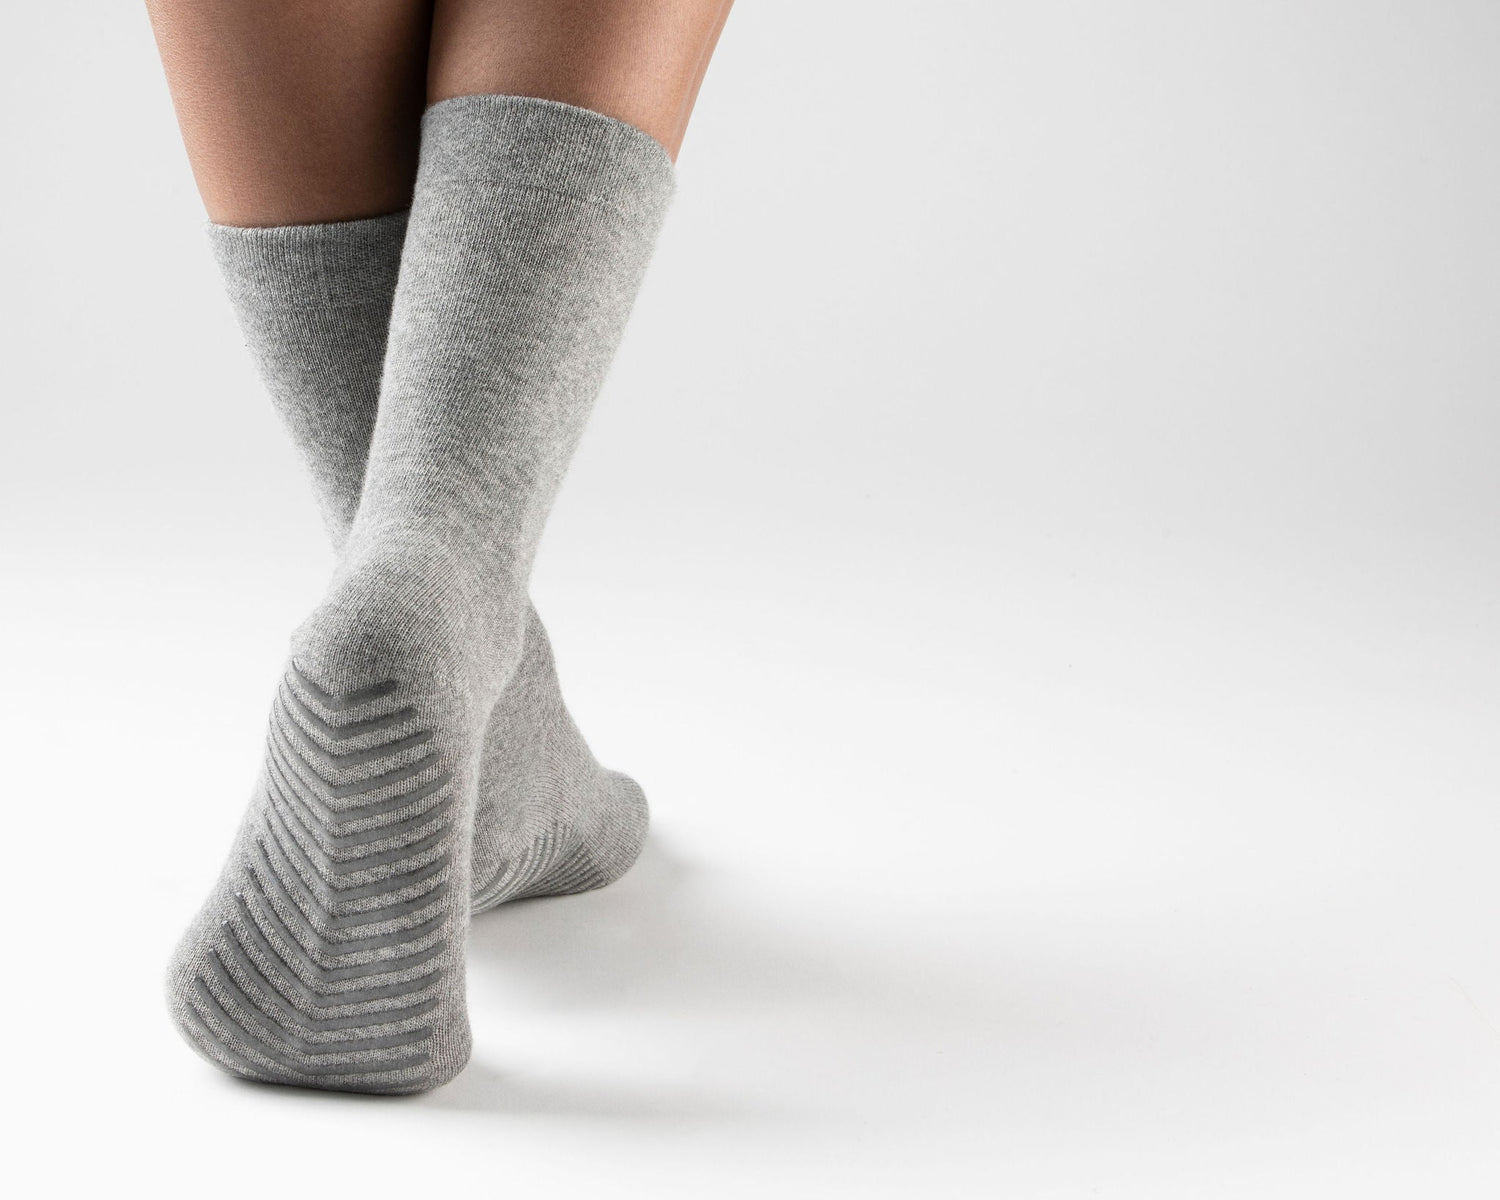 Model wearing light grey anti slip socks with tread pattern on the bottom.